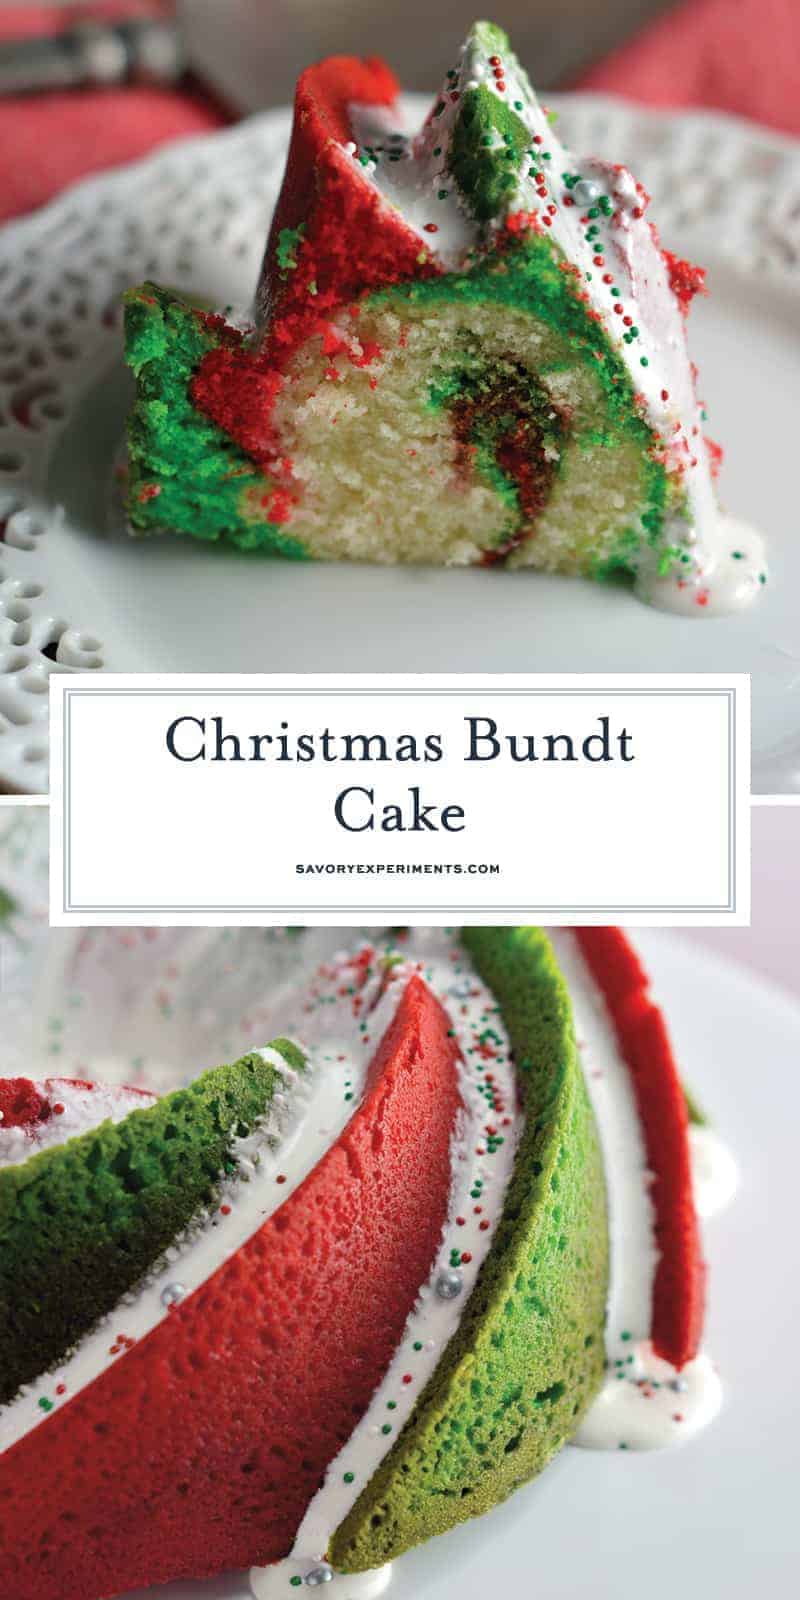 https://www.savoryexperiments.com/wp-content/uploads/2015/12/Christmas-Bundt-Cake-PIN-1.jpg